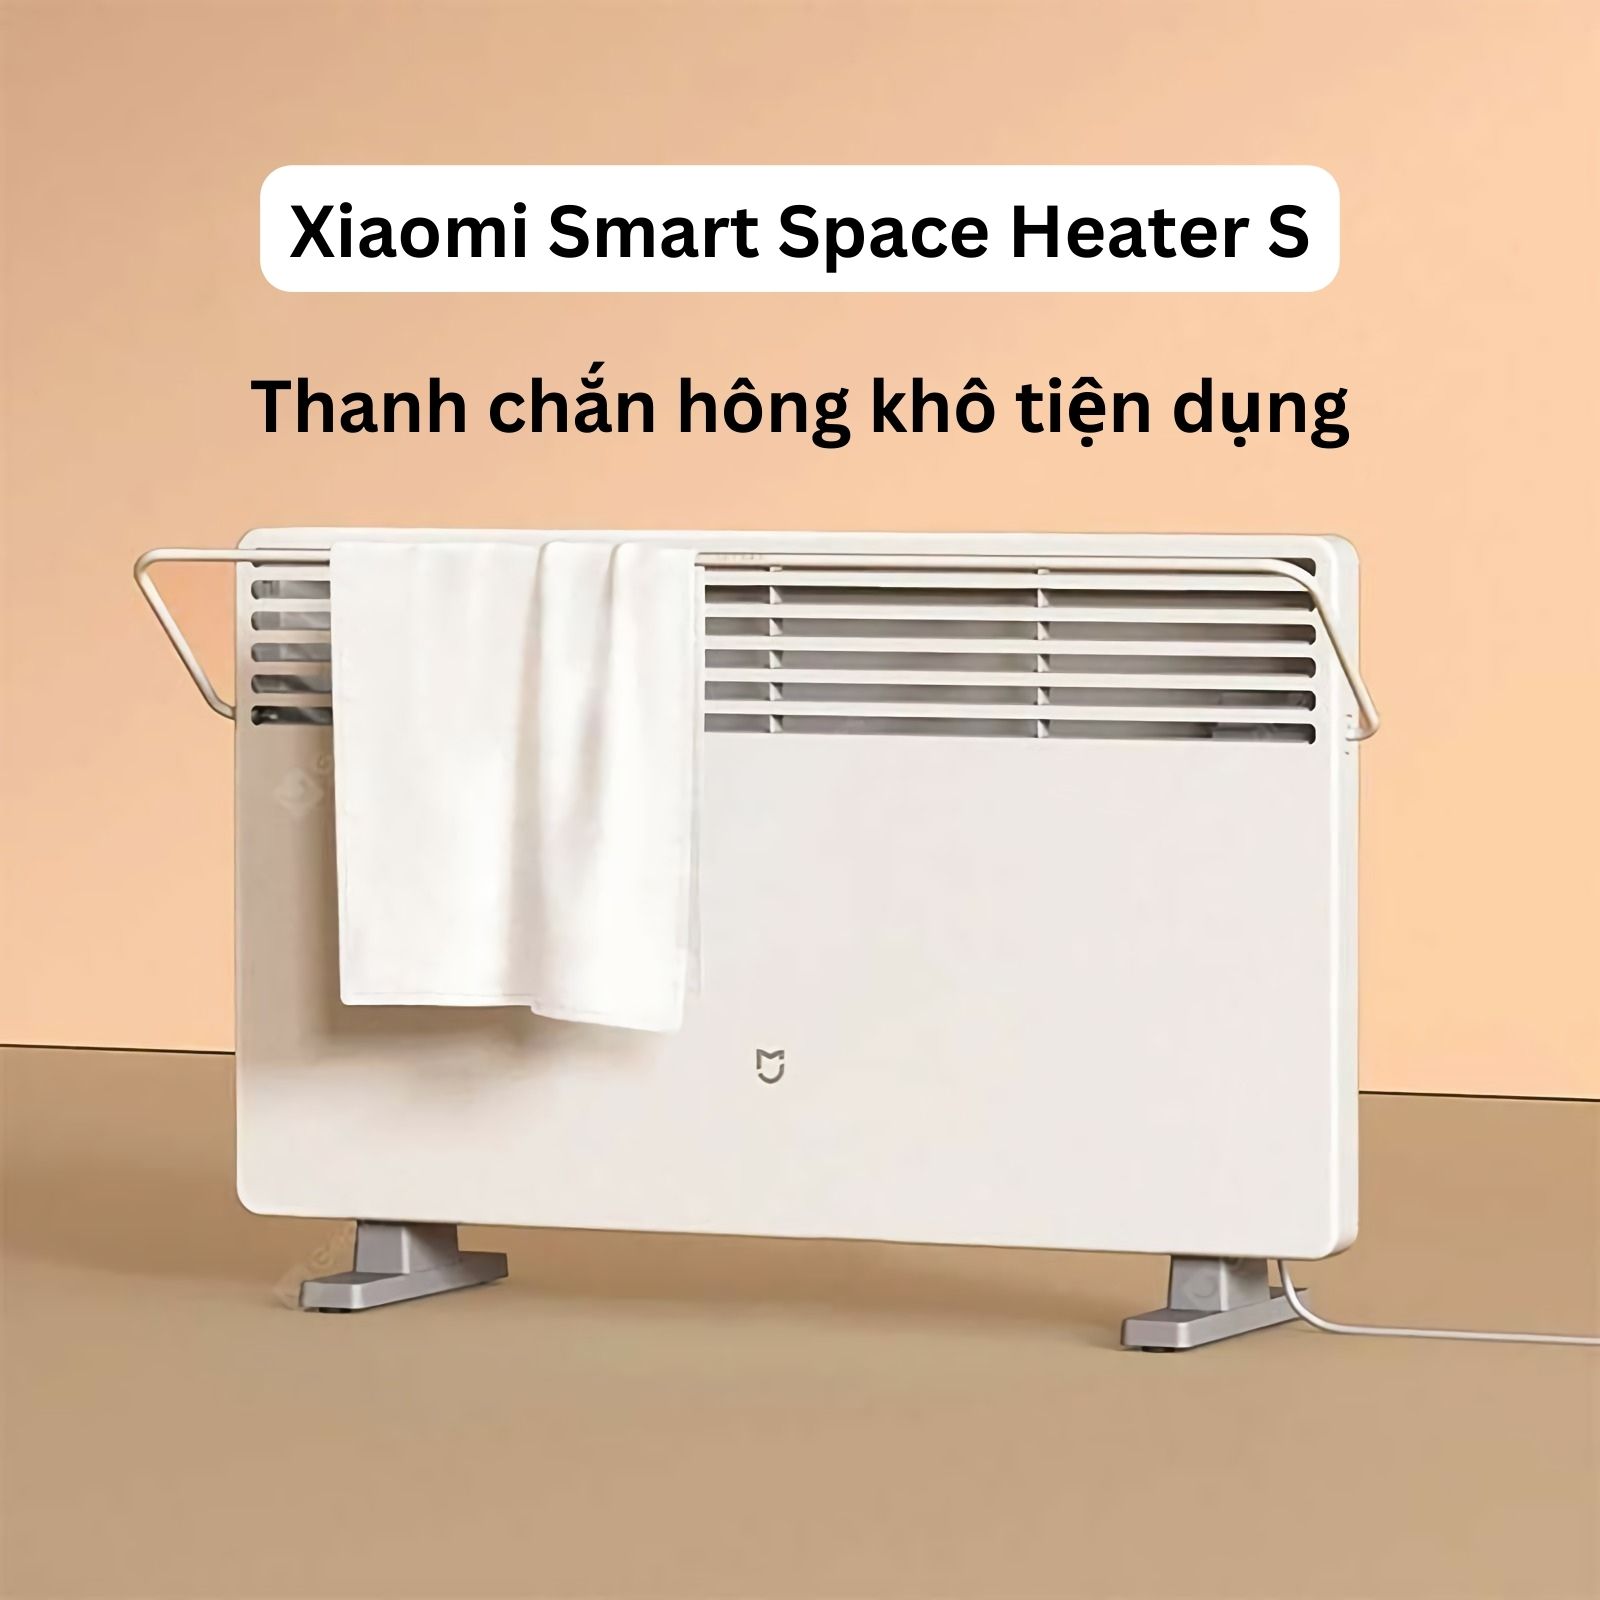 máy sưởi điện Xiaomi Smart Space Heater S